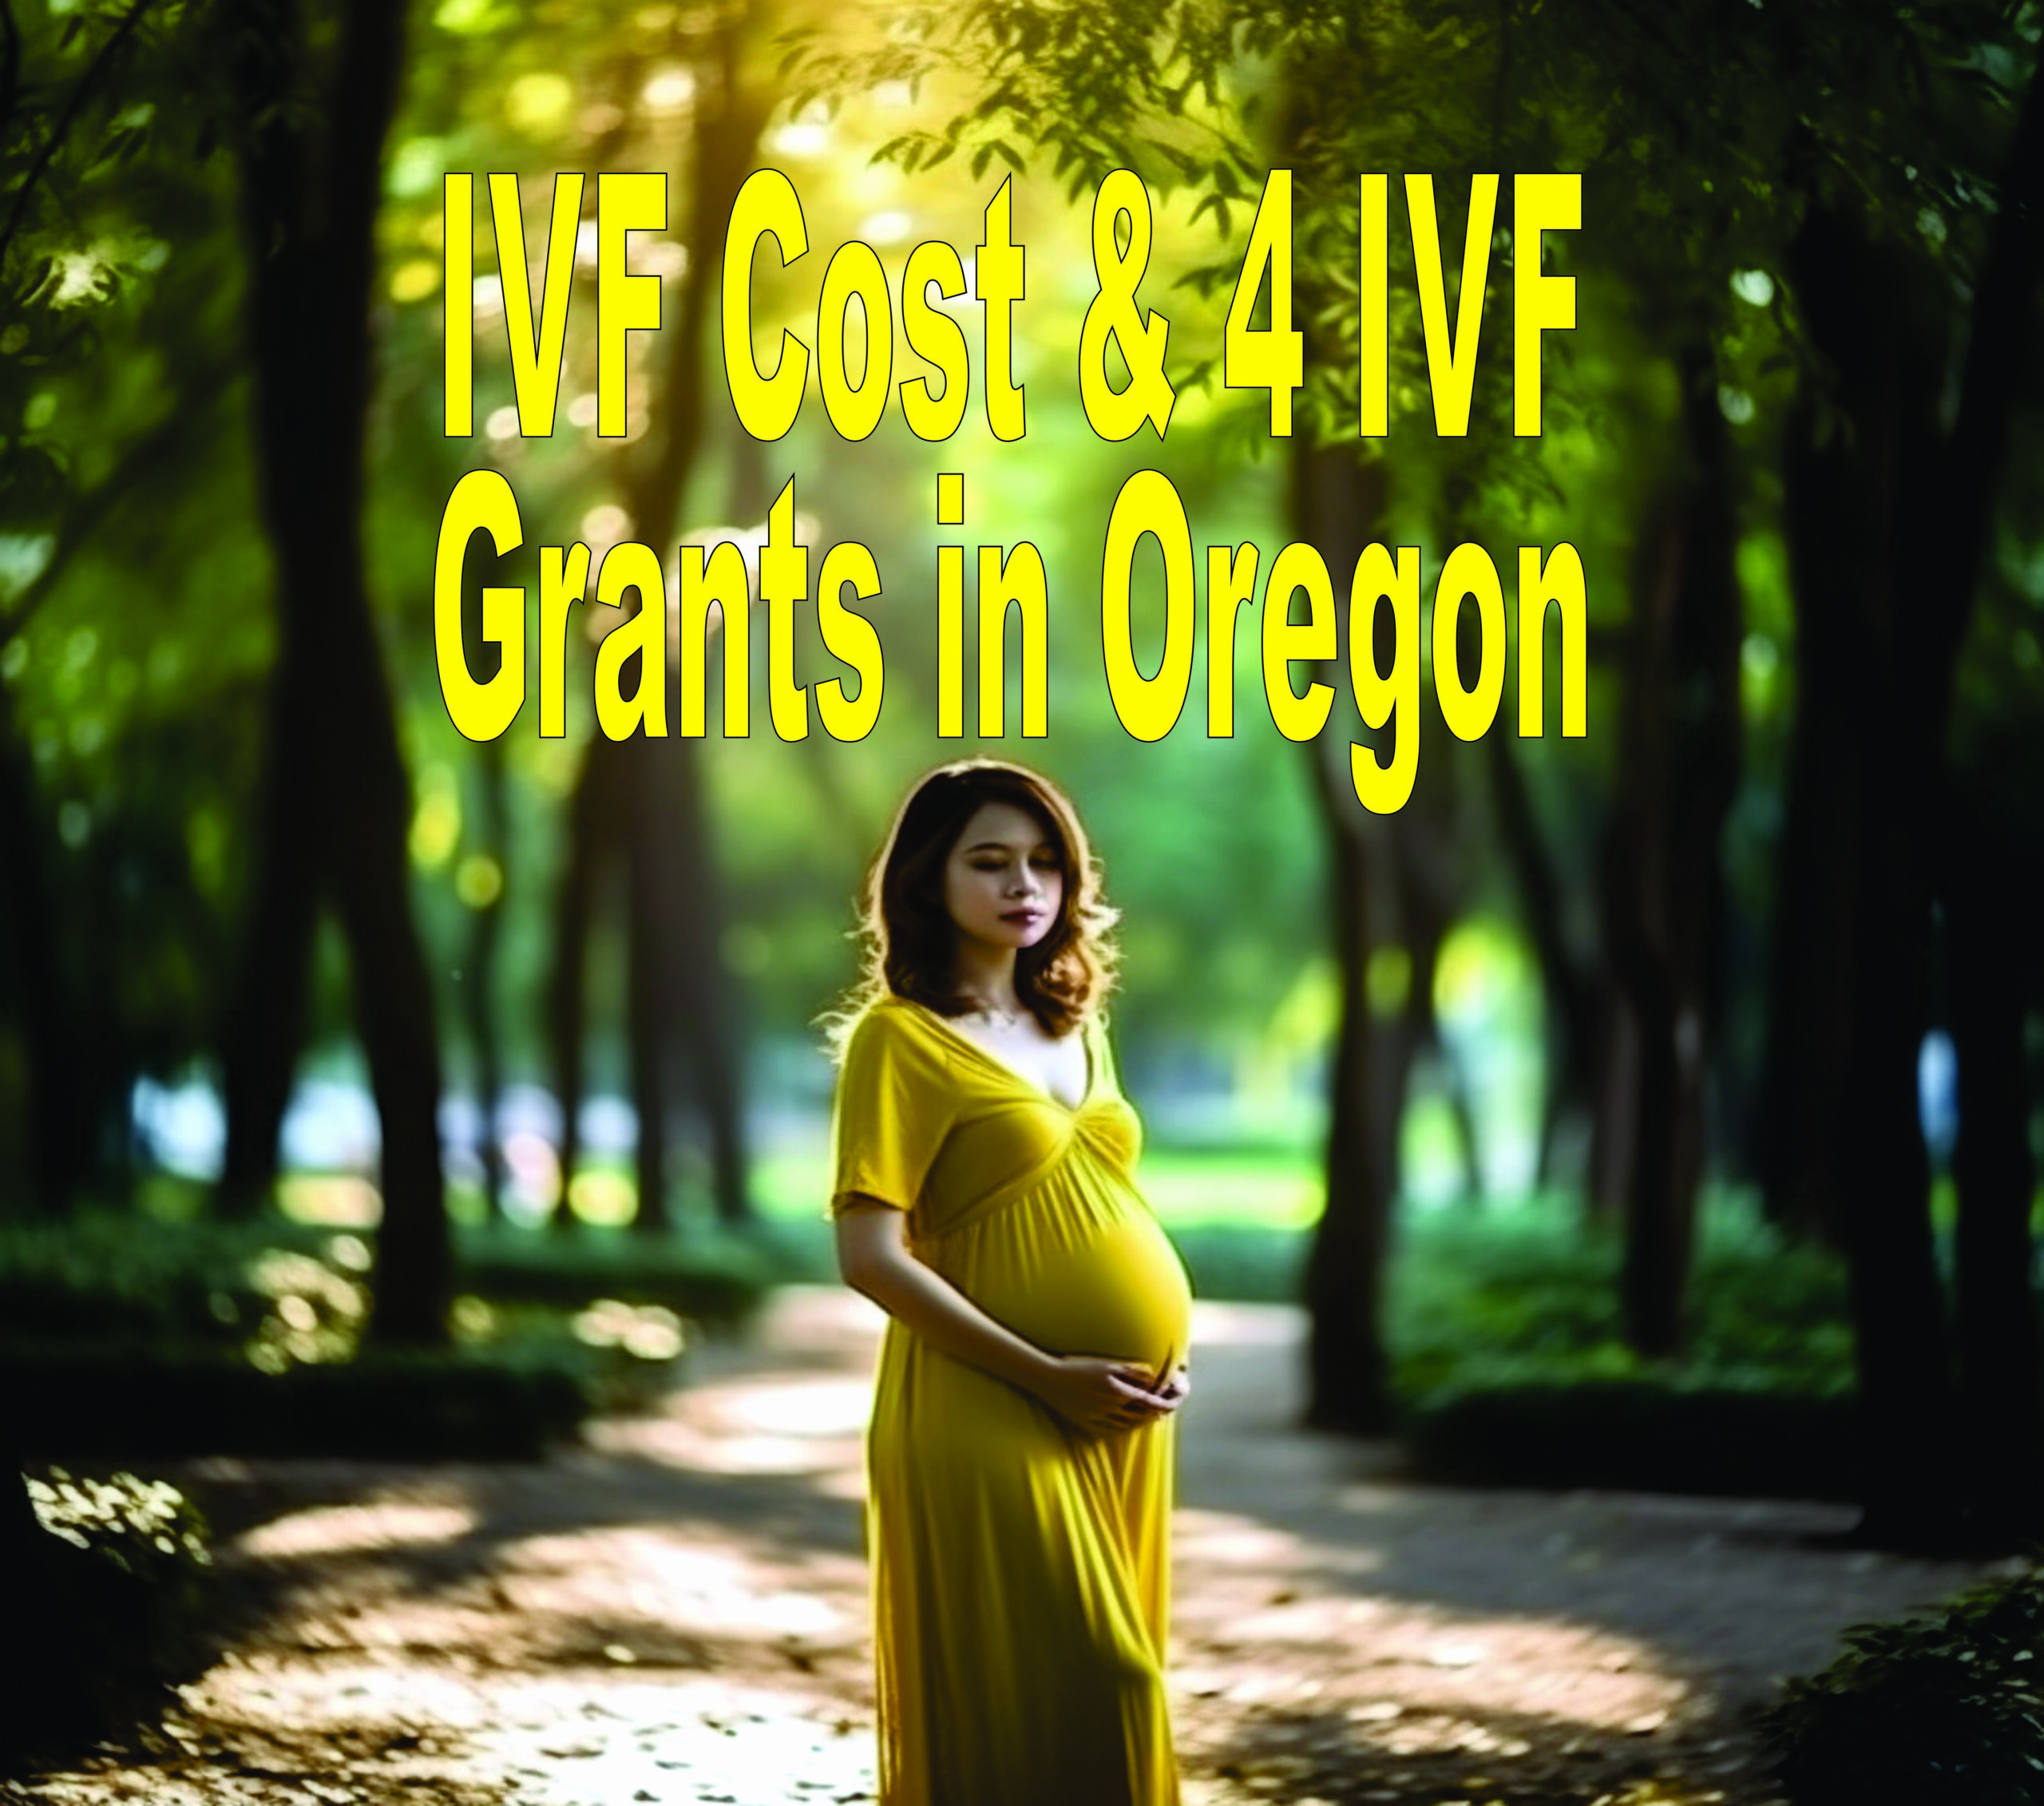 Ivf Cost & 4 Ivf Grants In Oregon